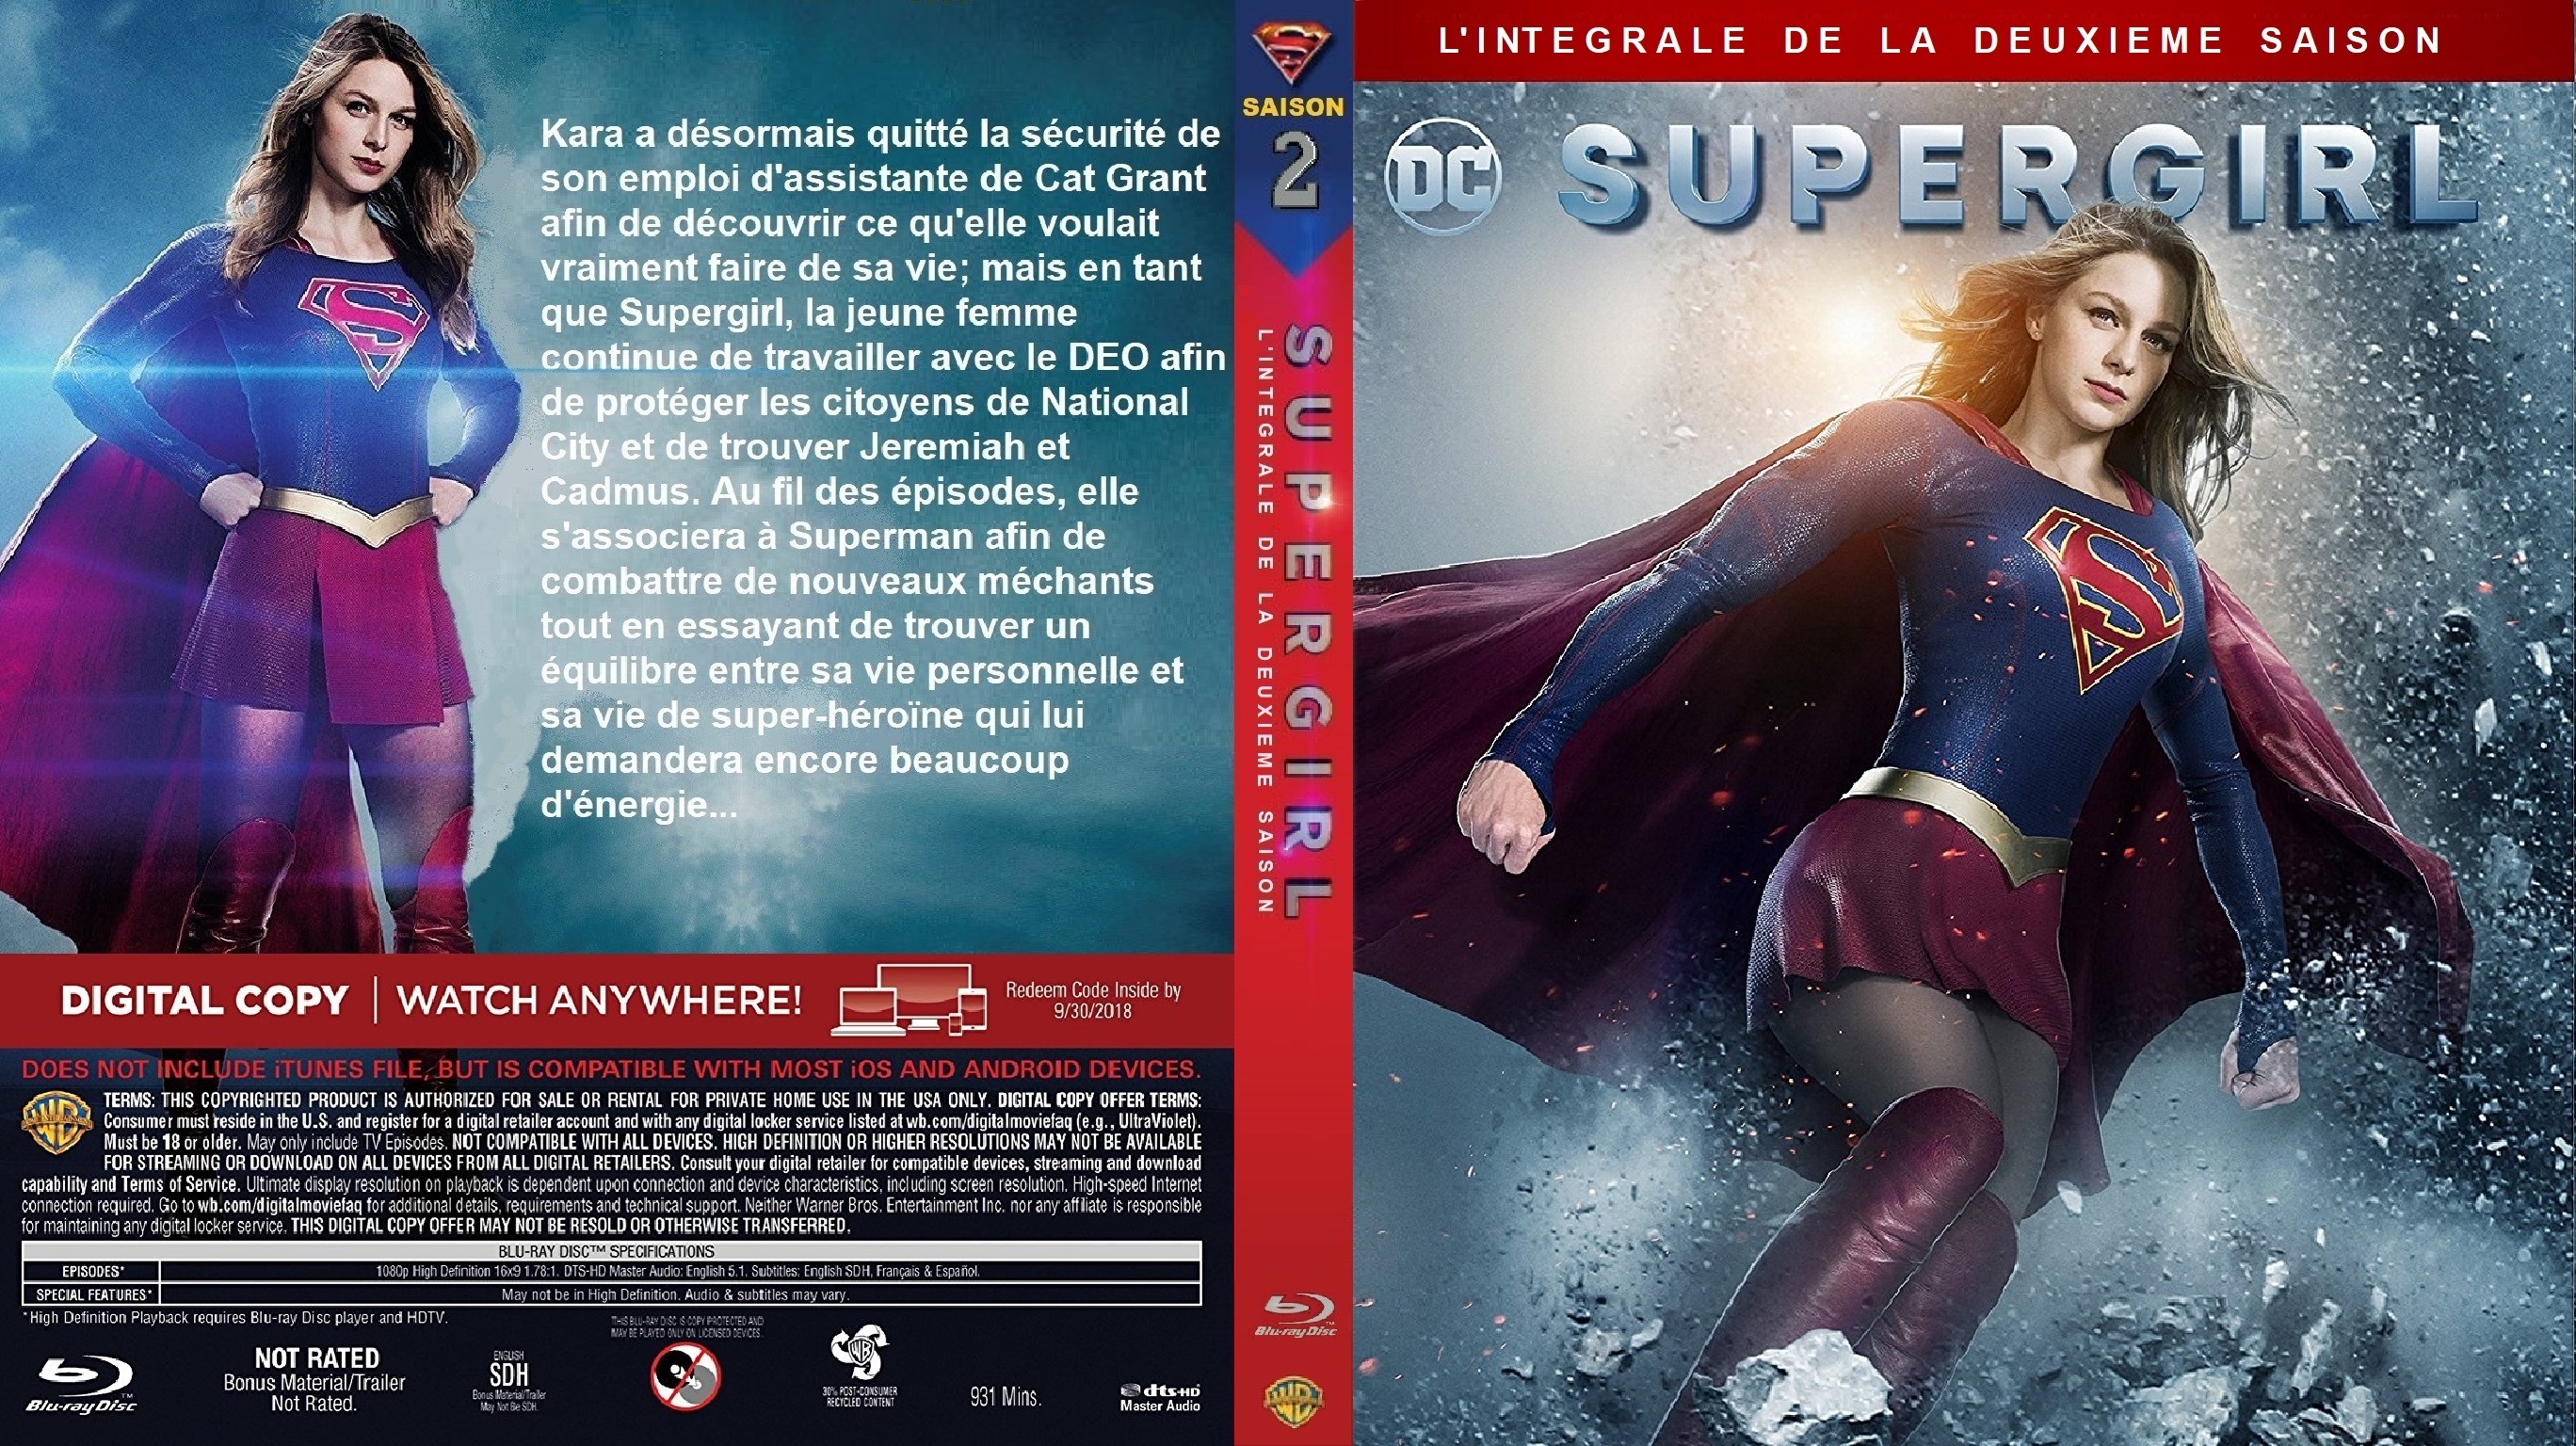 Jaquette DVD Supergirl saison 2 custom (BLU-RAY) v2